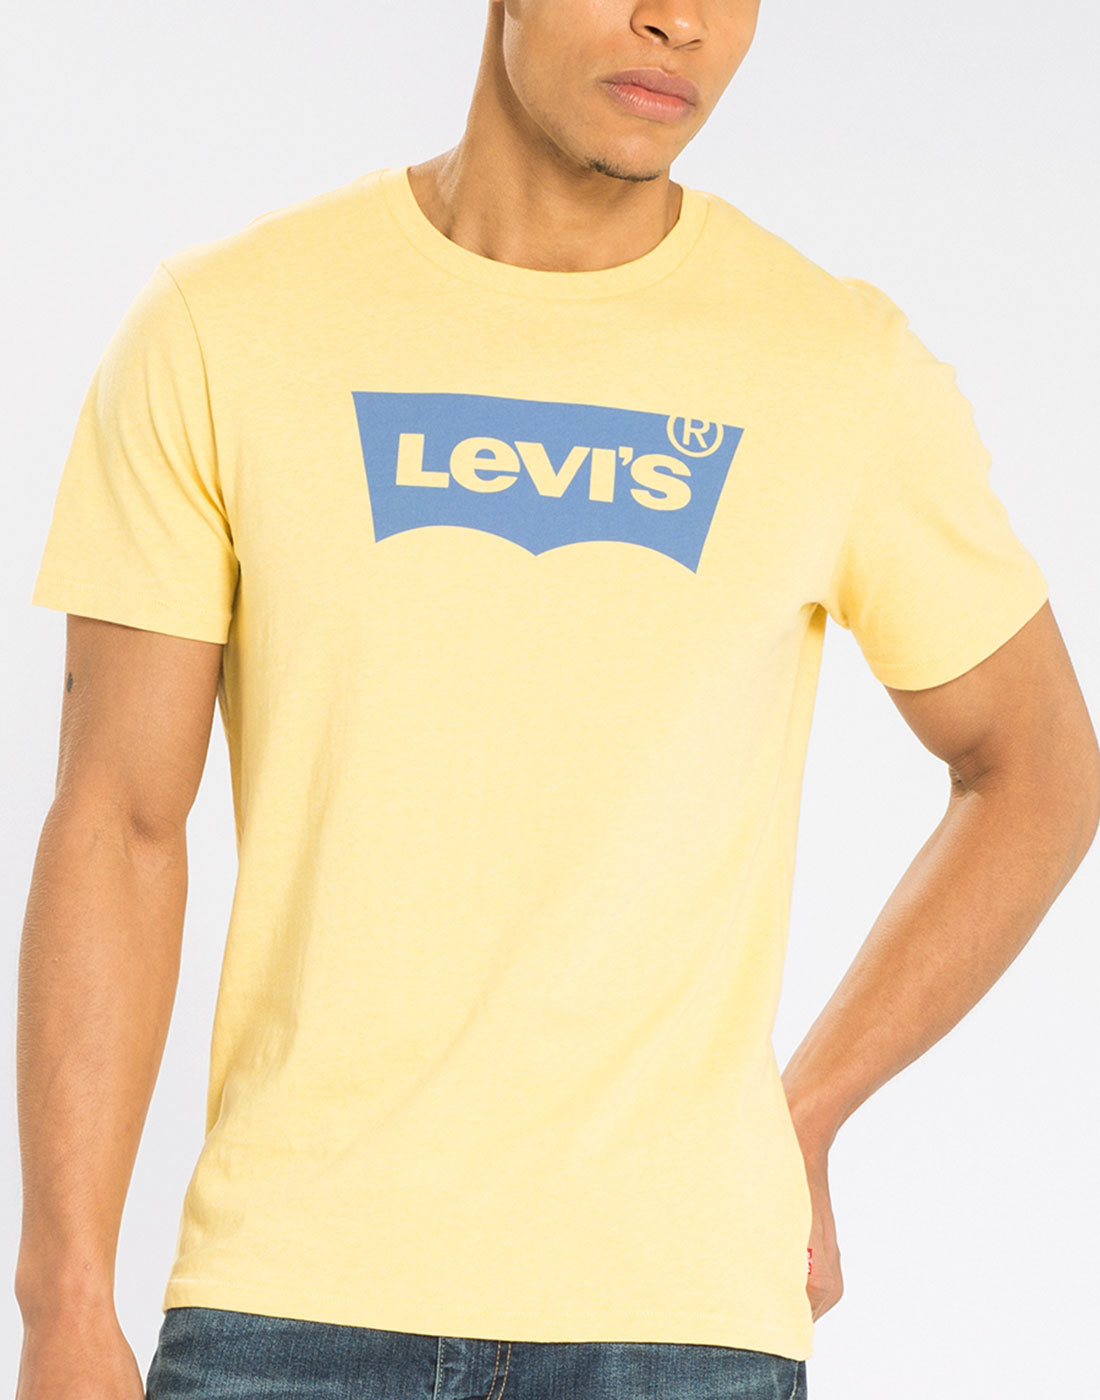 yellow levis t shirt